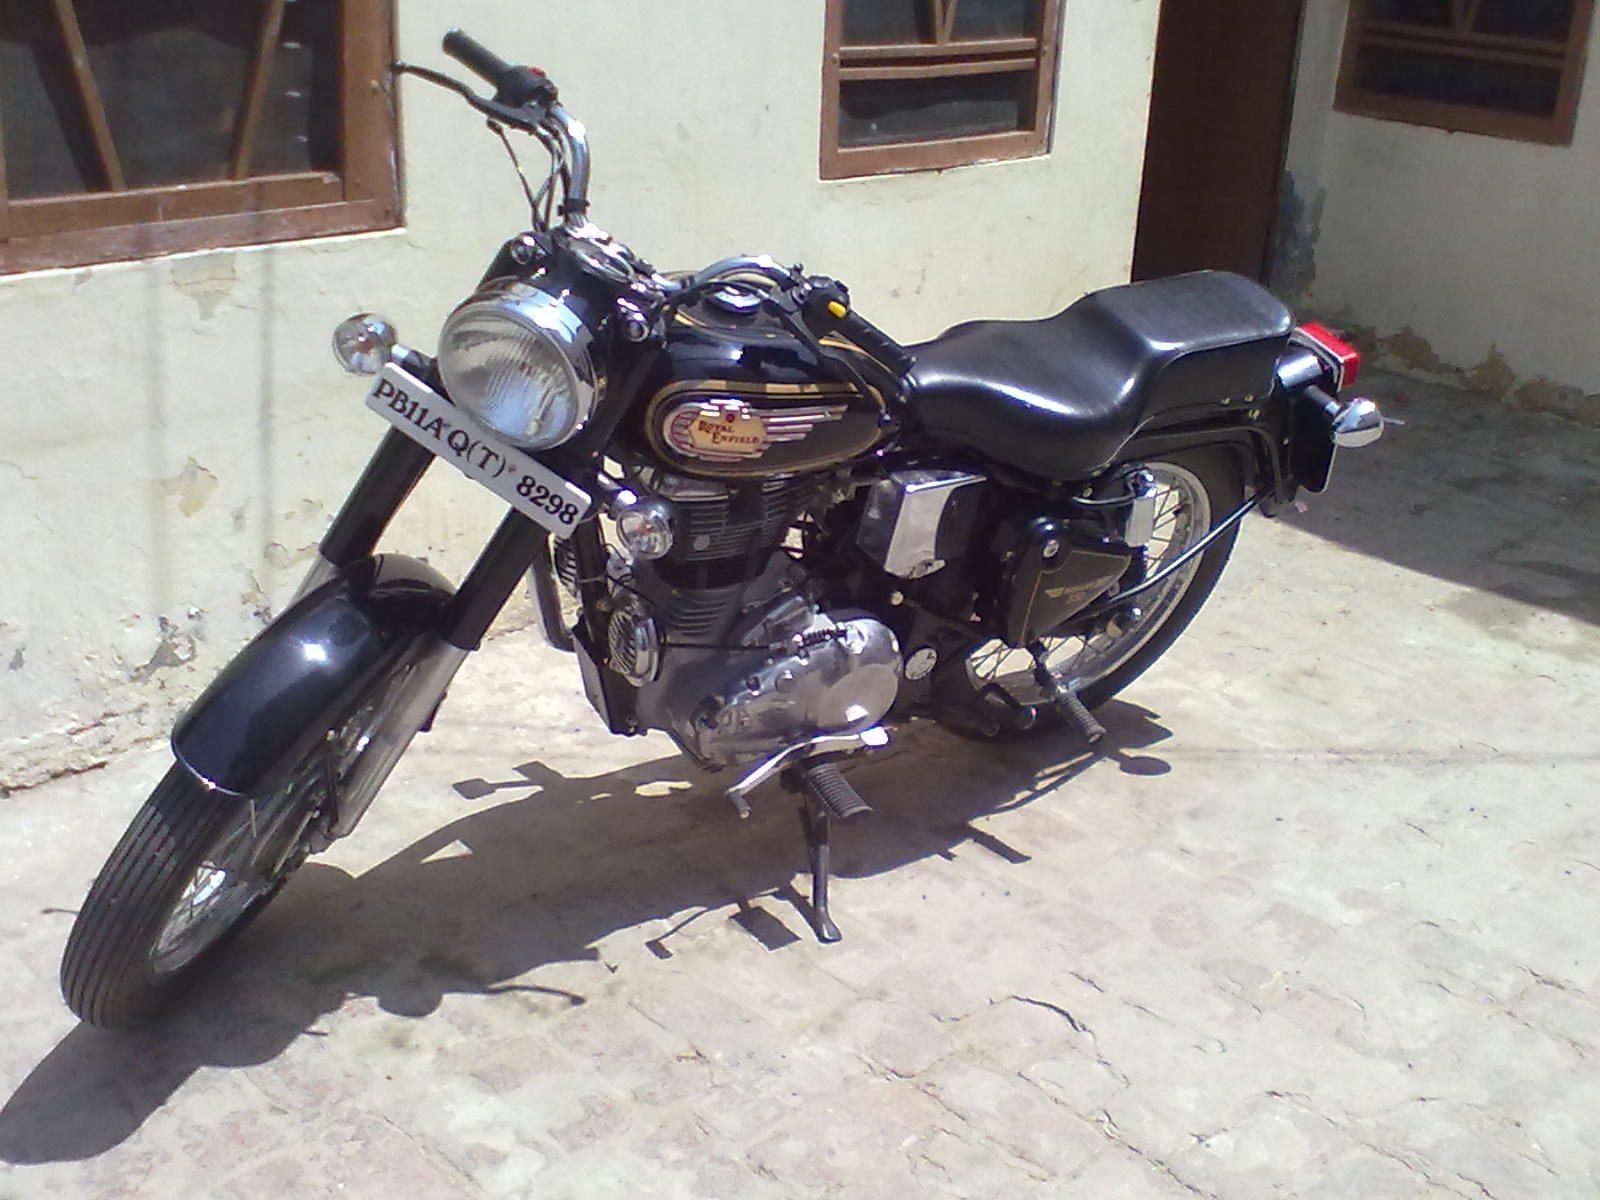 fondos de pantalla de bala punjabi,vehículo terrestre,motocicleta,vehículo,rueda de aleación,vehículo de motor